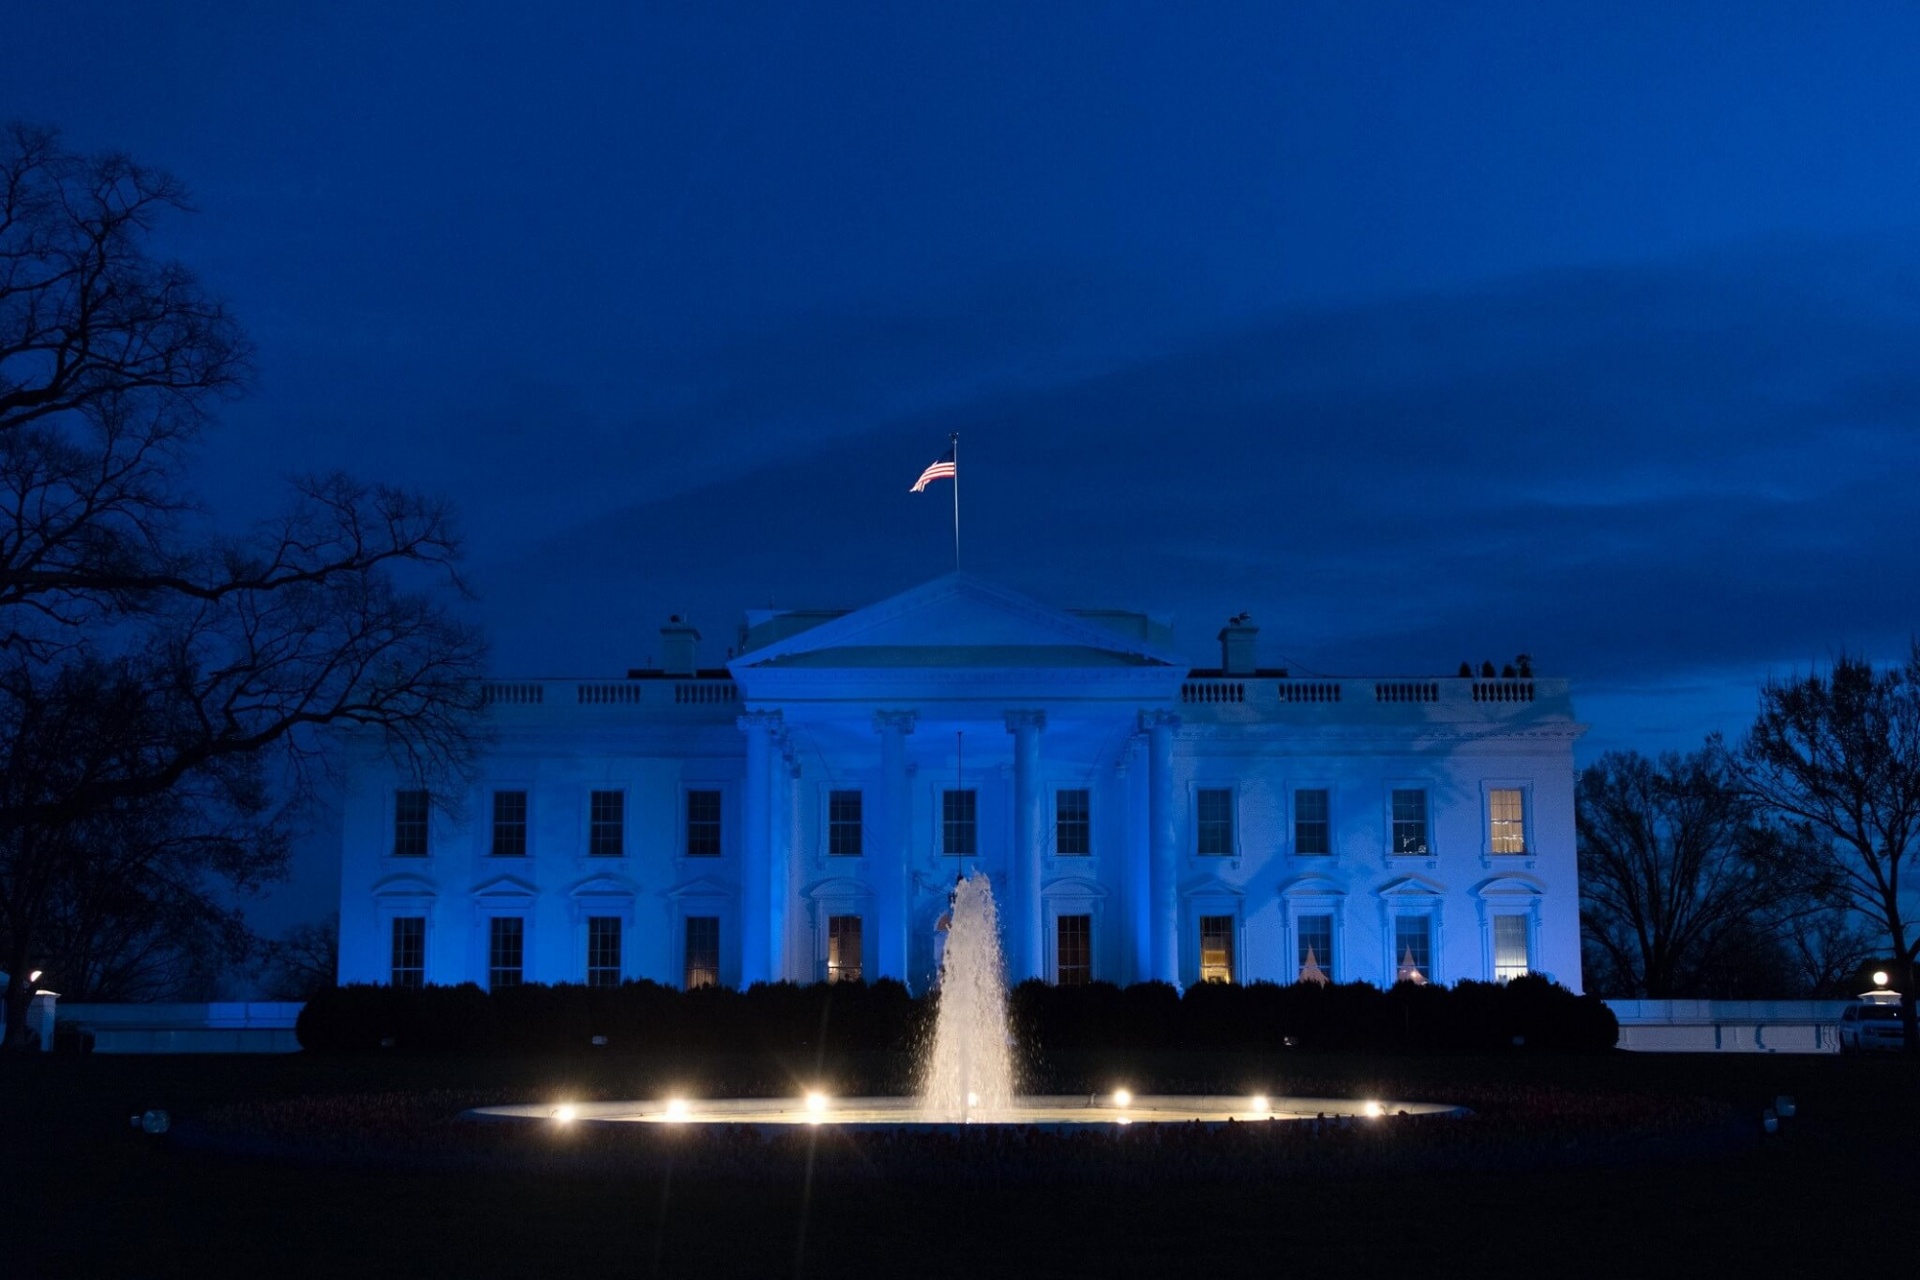 USA Presidential Mansion Lit in Blue